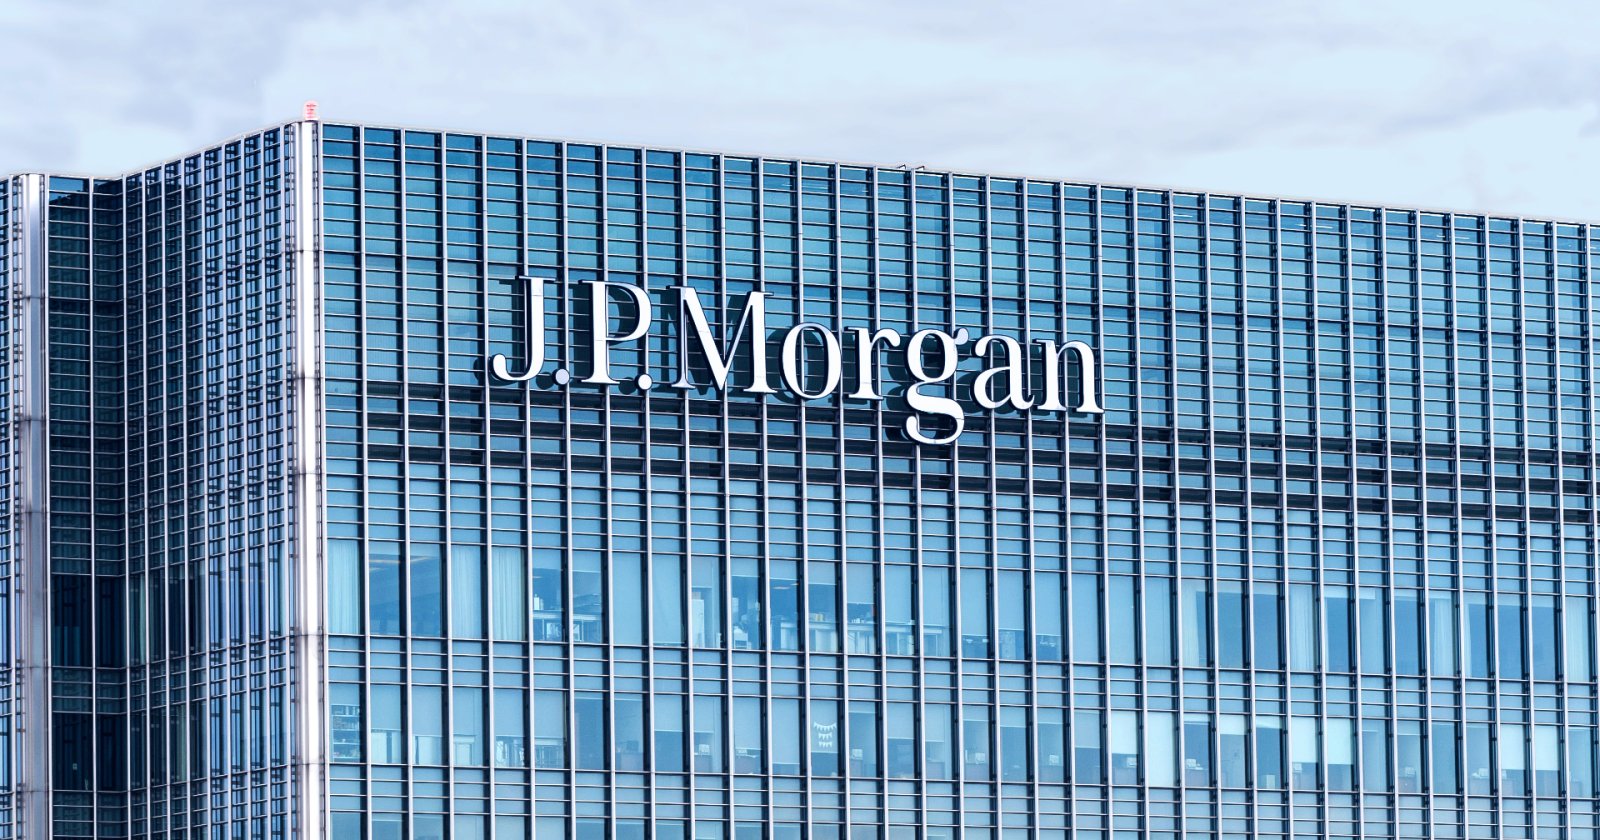 JPMorgan อาจถอนกิจการจากจีน หากรัฐบาลสหรัฐฯ ออกคำสั่ง